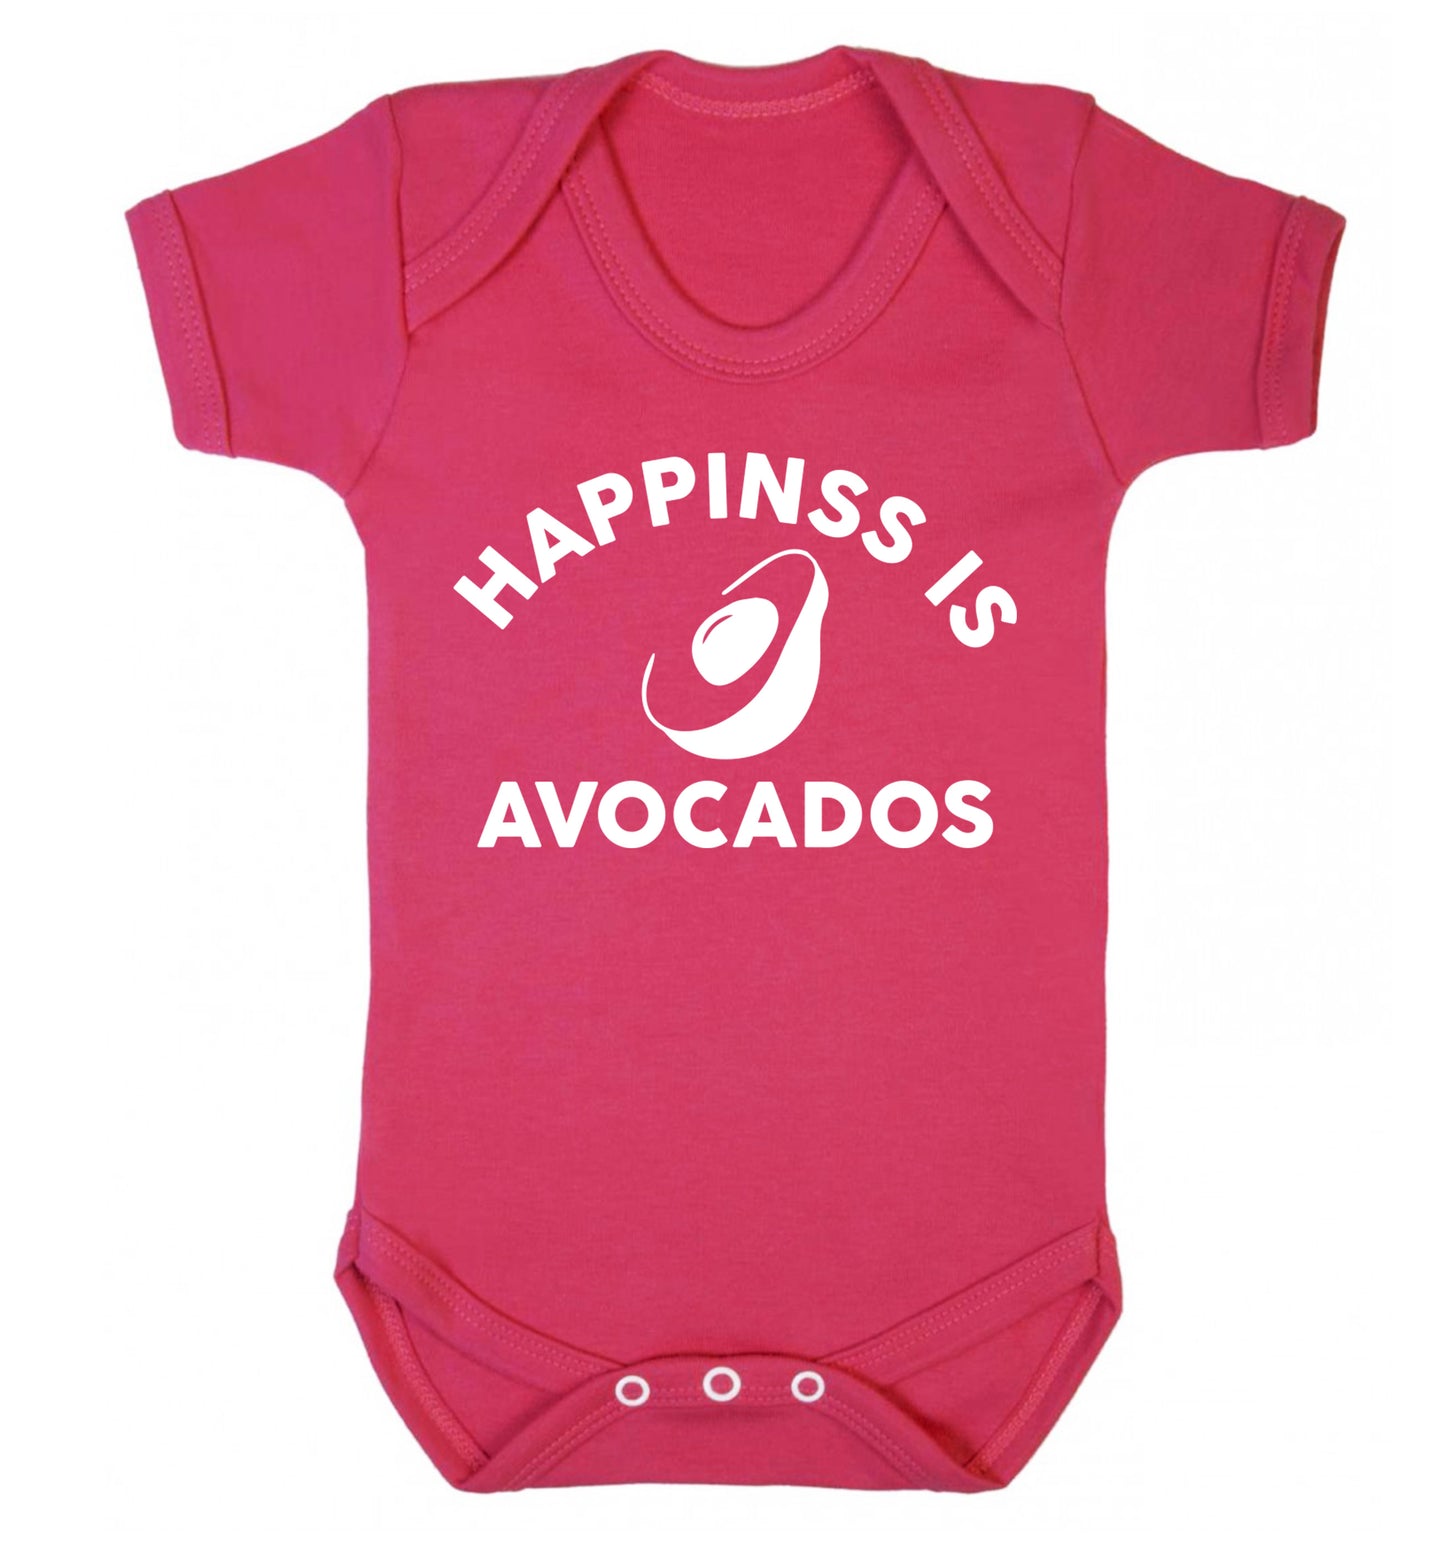 Happiness is avocados Baby Vest dark pink 18-24 months